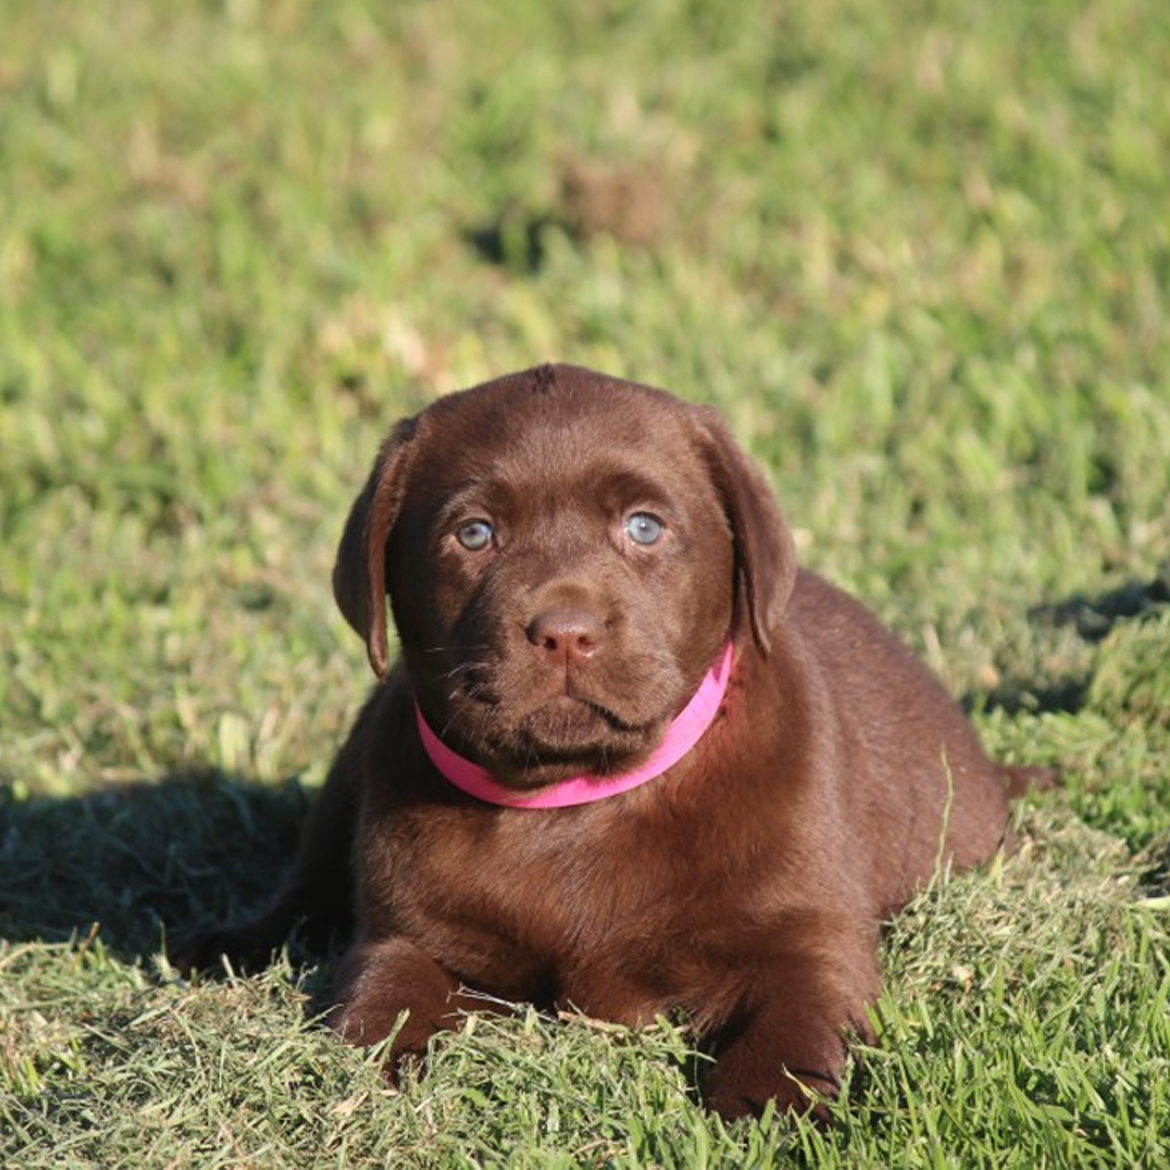 Puppy-1-Square--Yellowdog-Labradors-Labrador-Puppies-for-Sale-Hunter-Valley-Australia-Yellow-Chocolate-Black-Lab-Puppies